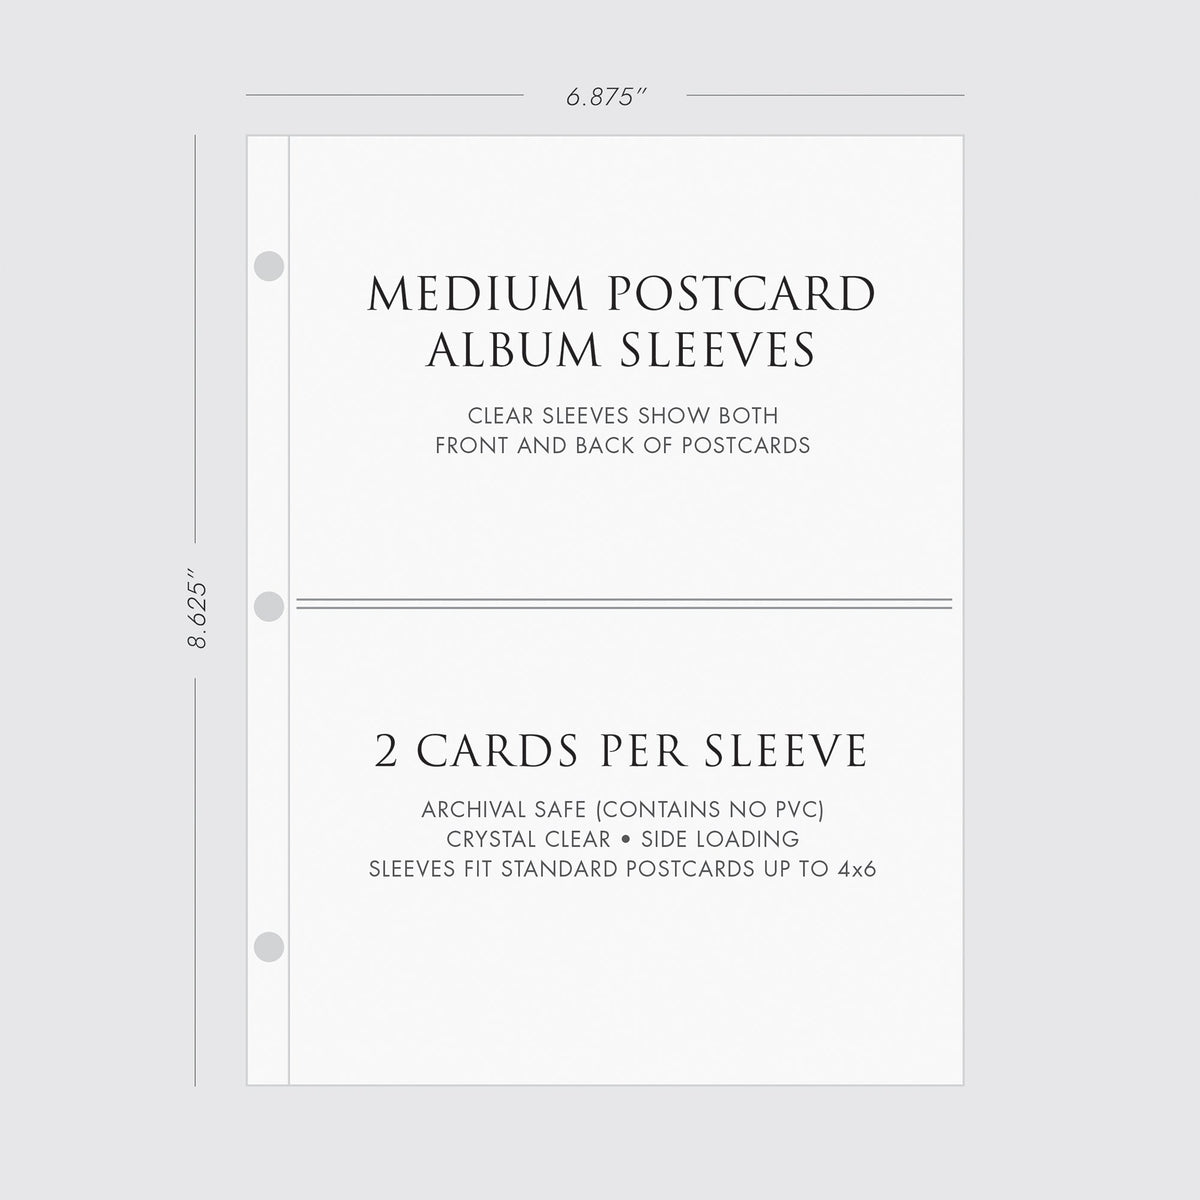 Medium Postcard Album with Moss Vegan Leather Cover | Fits 4x6 postcards